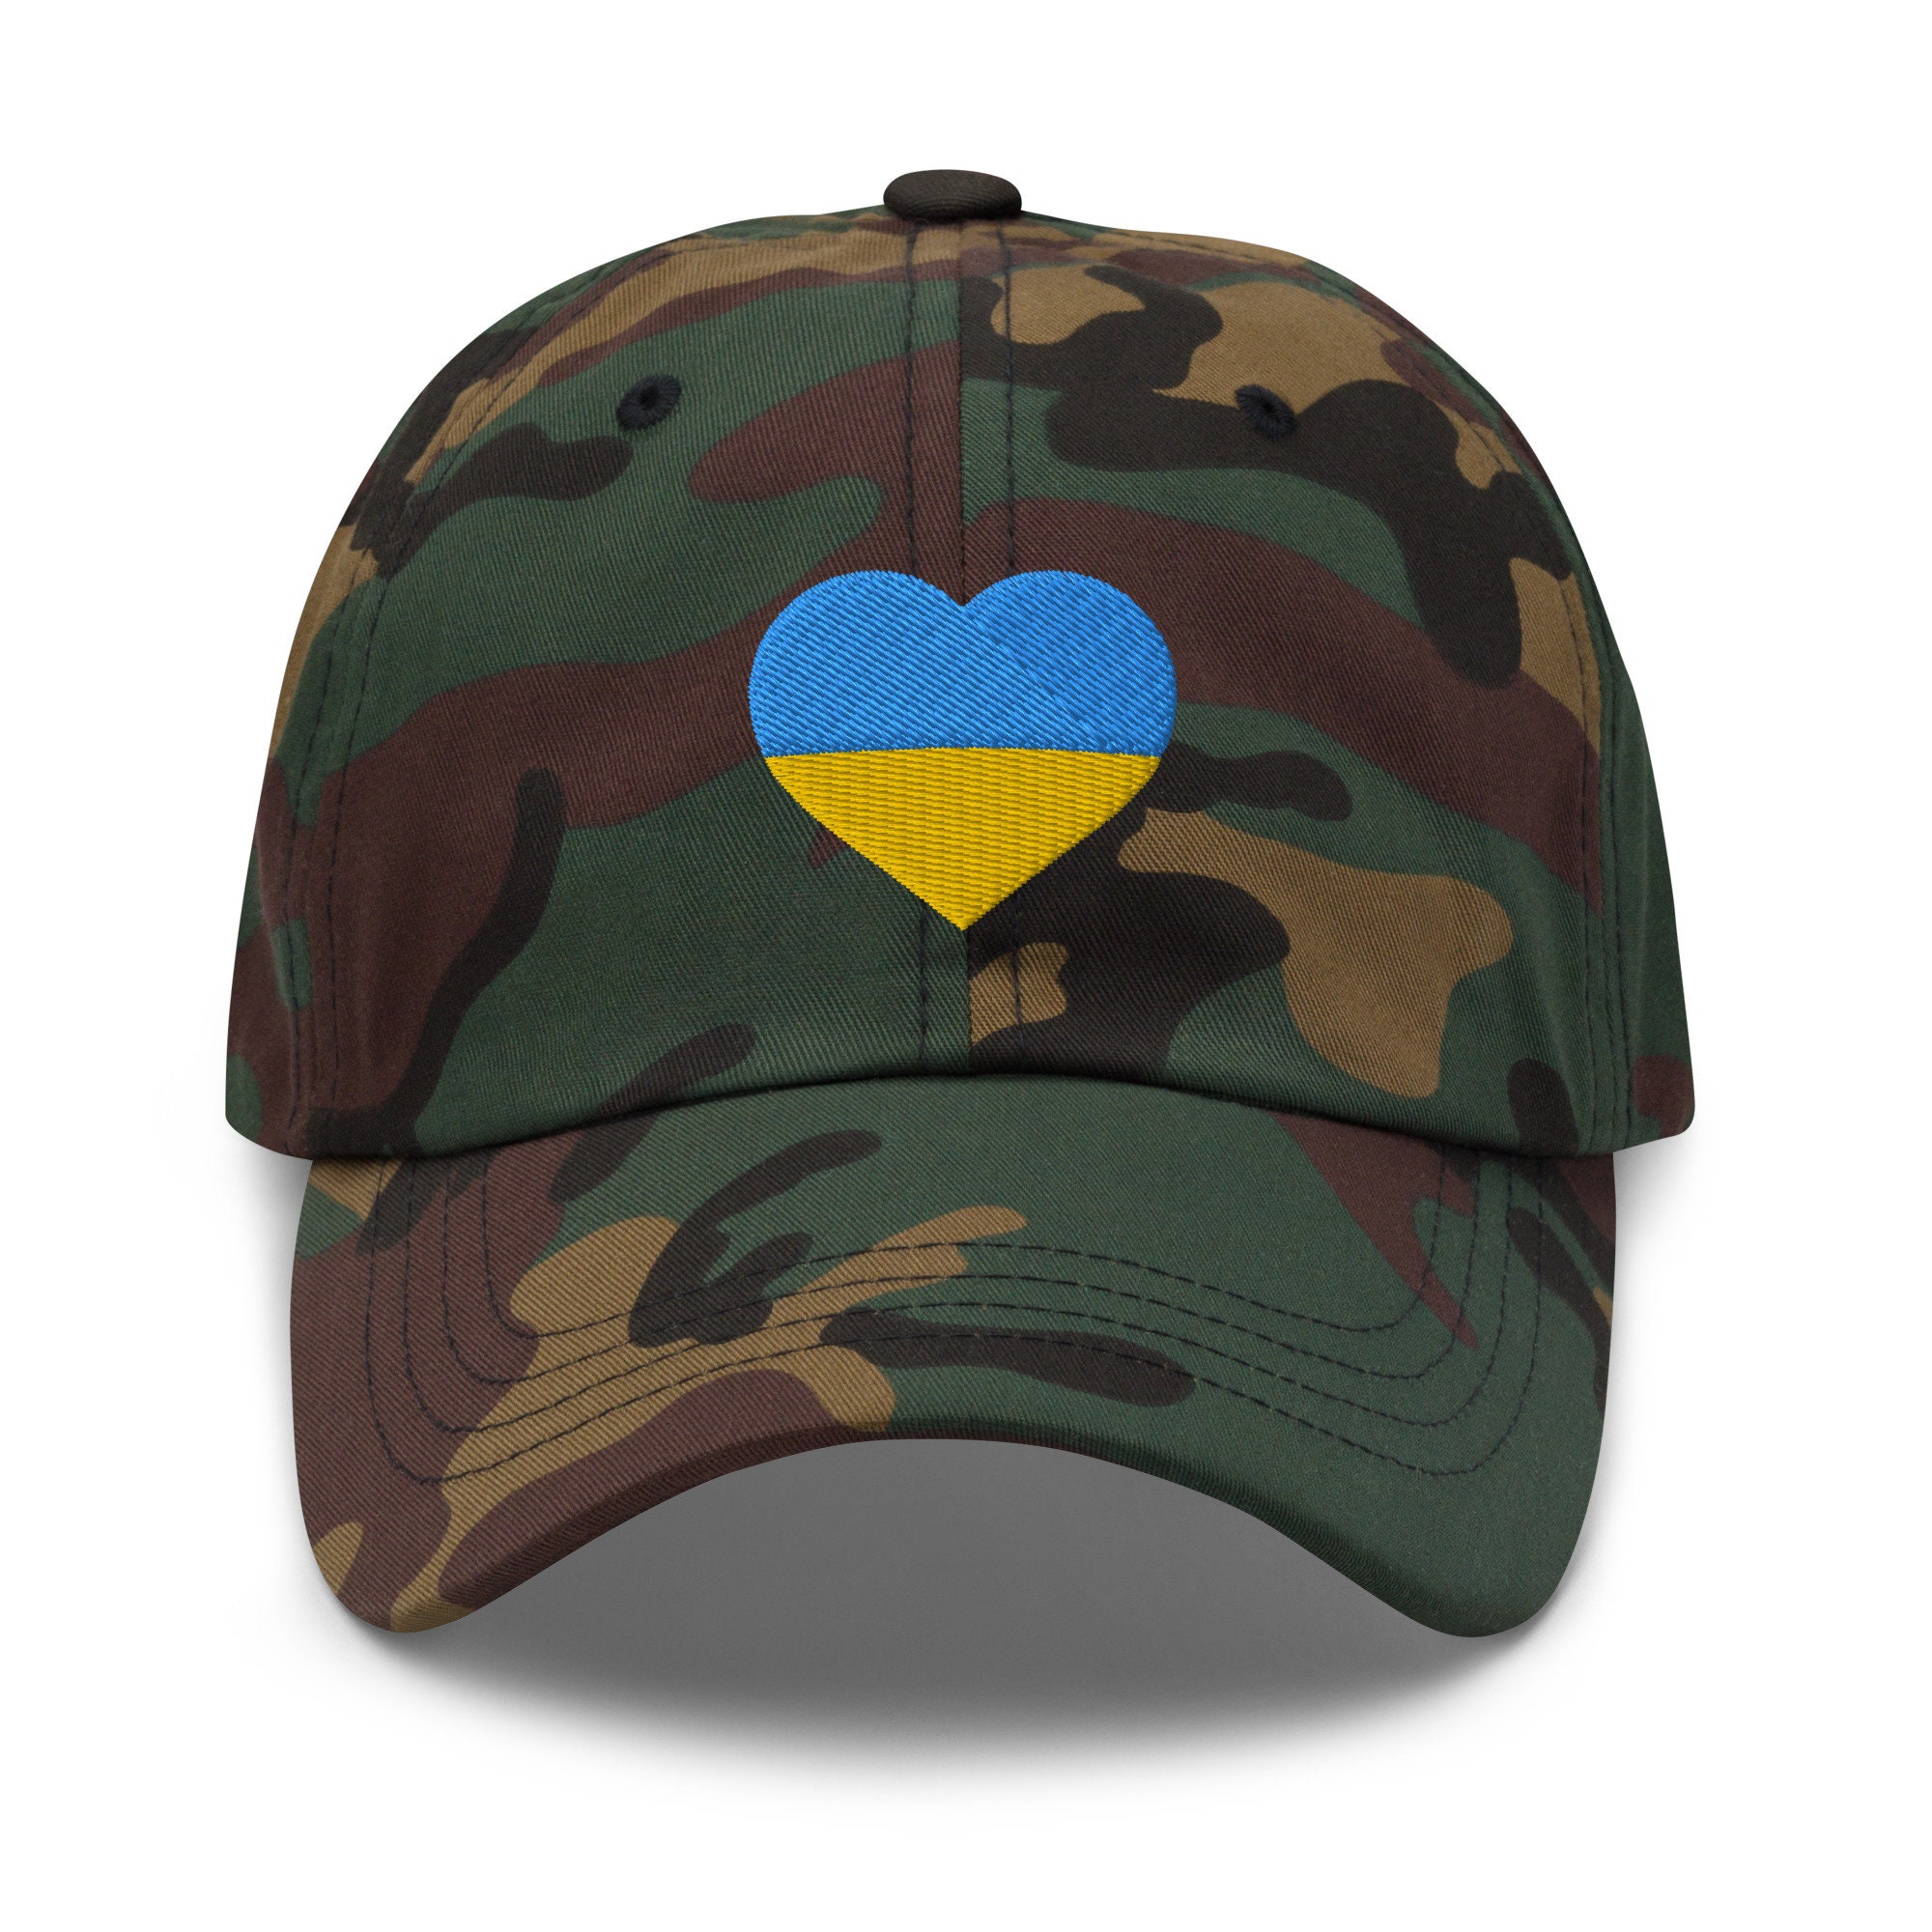 Ukraine Flag Heart Pray For Peace Baseball Cap Father's Day Hat